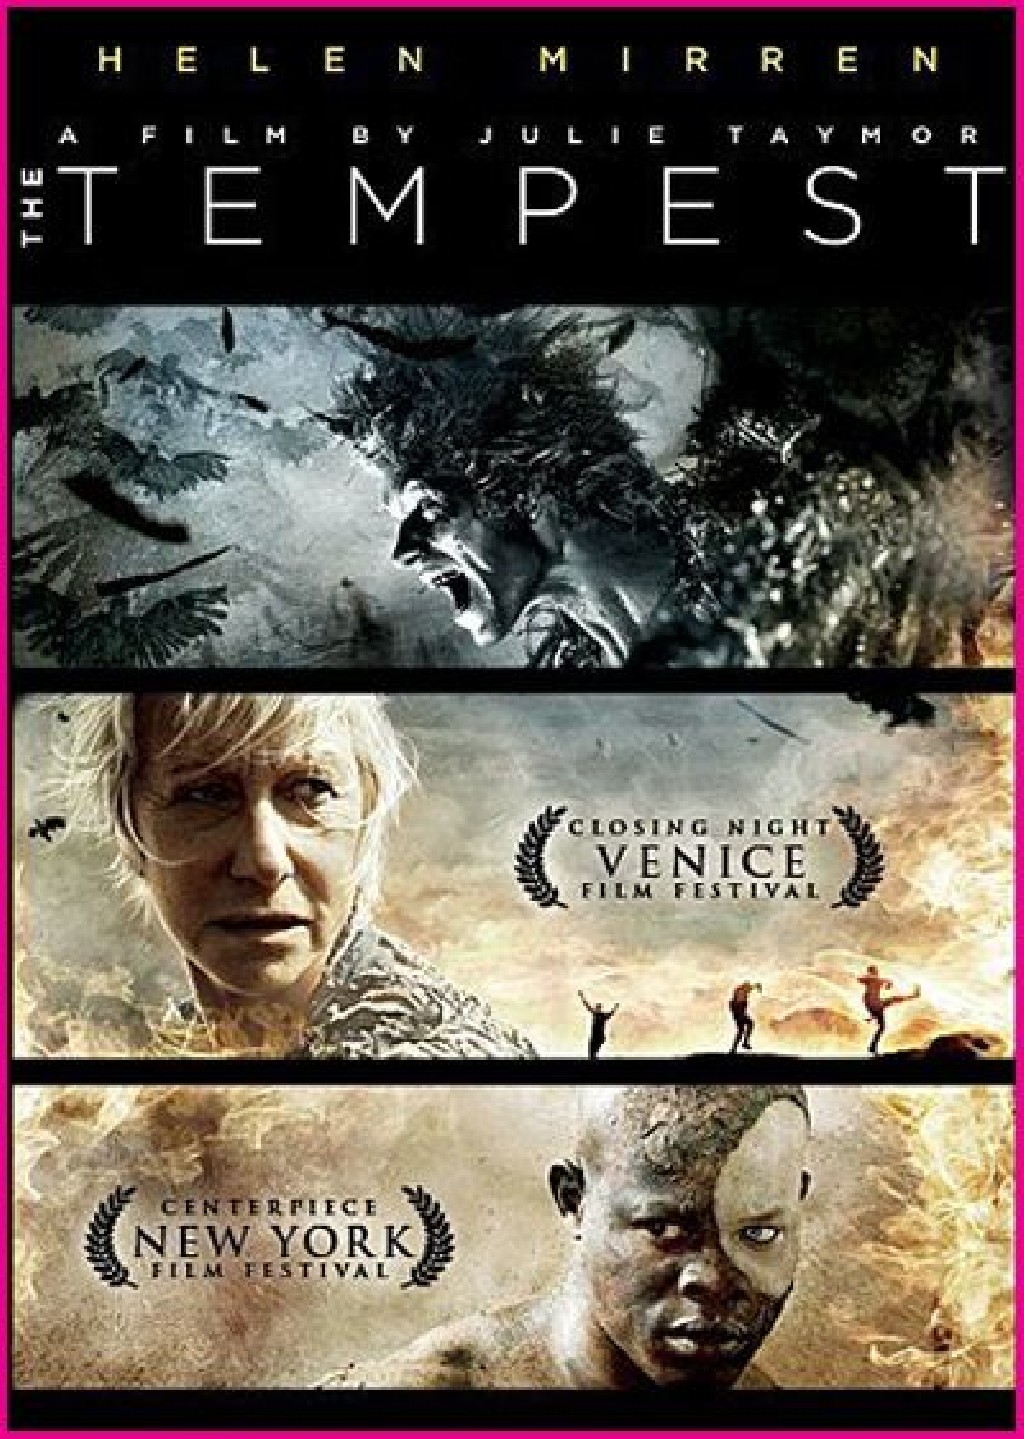 [Mt]The Tempest - 2010[Dvdrip-Xvid-Eng Sub-Ita-Mp3]